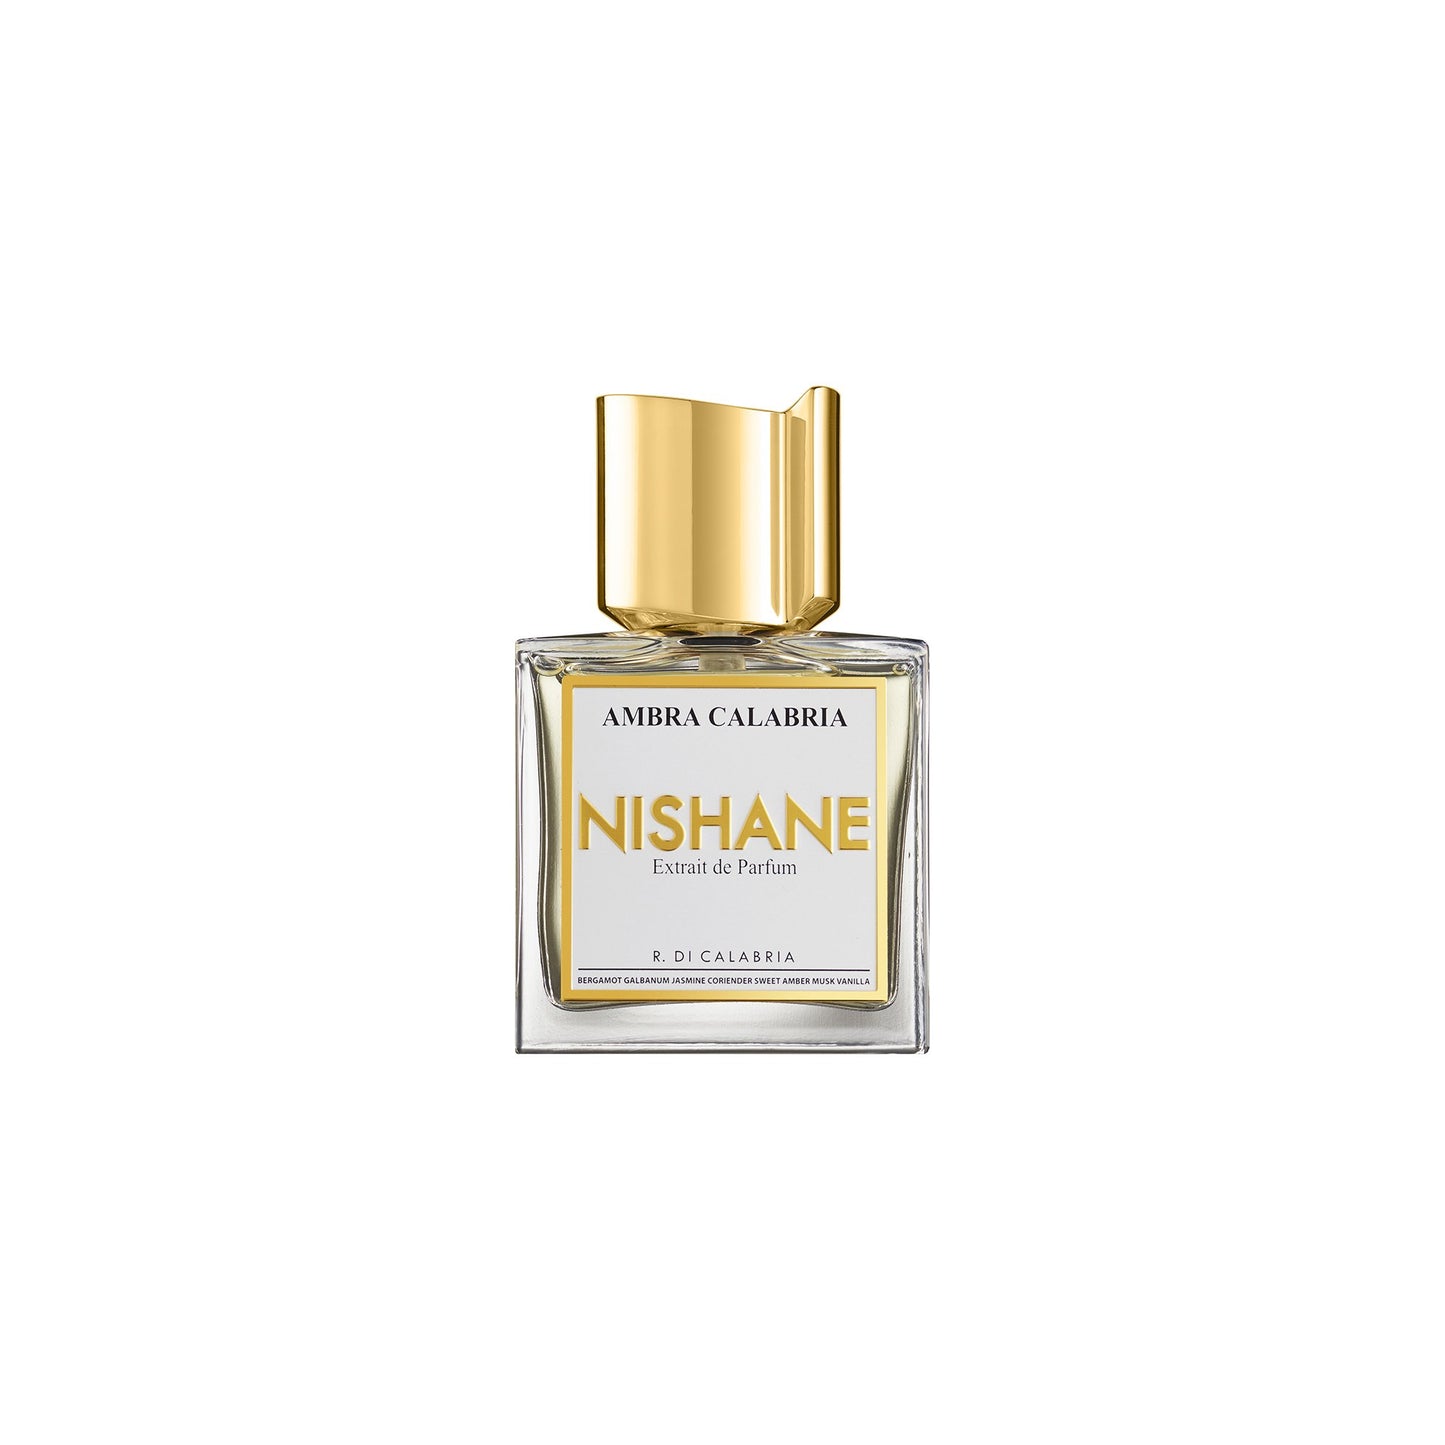 Ambra Calabria 1.5ml Sample Vial - Extrait de Parfum